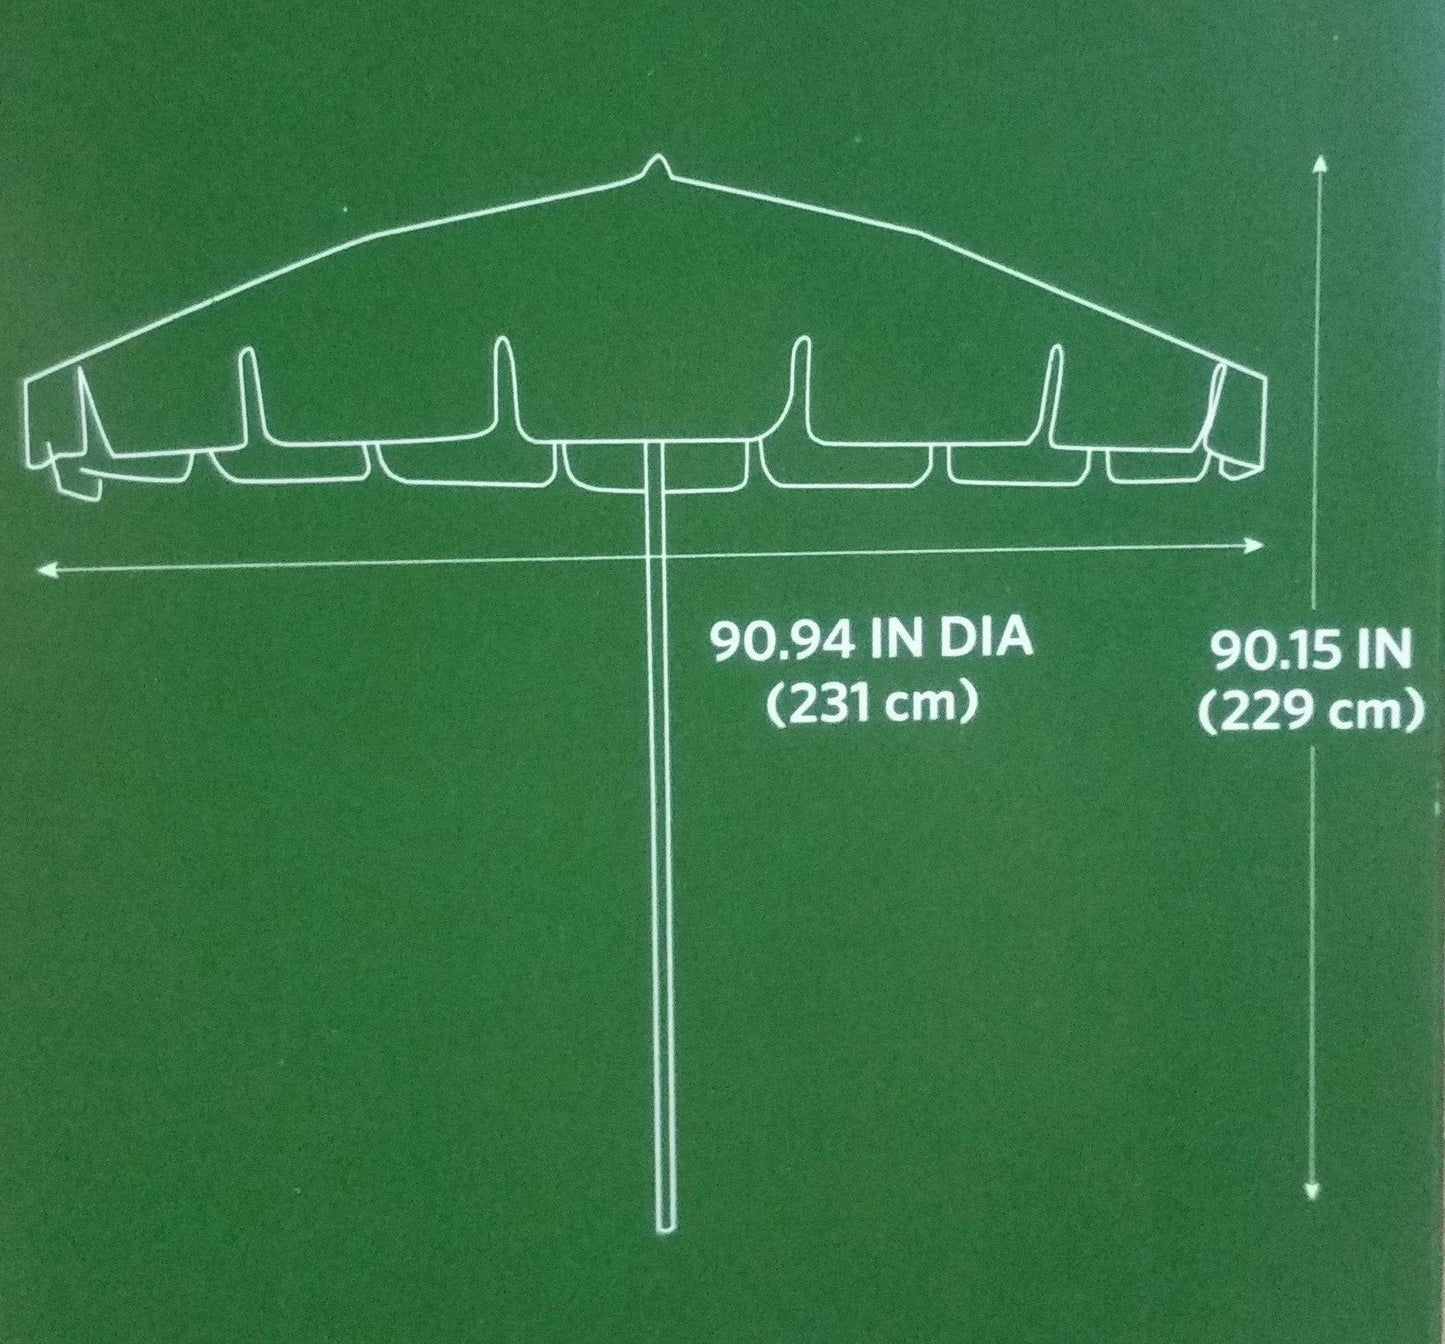 Large 8' Hula Beach Umbrella Tiki Thatch Canopy Patio Pool Market Shade